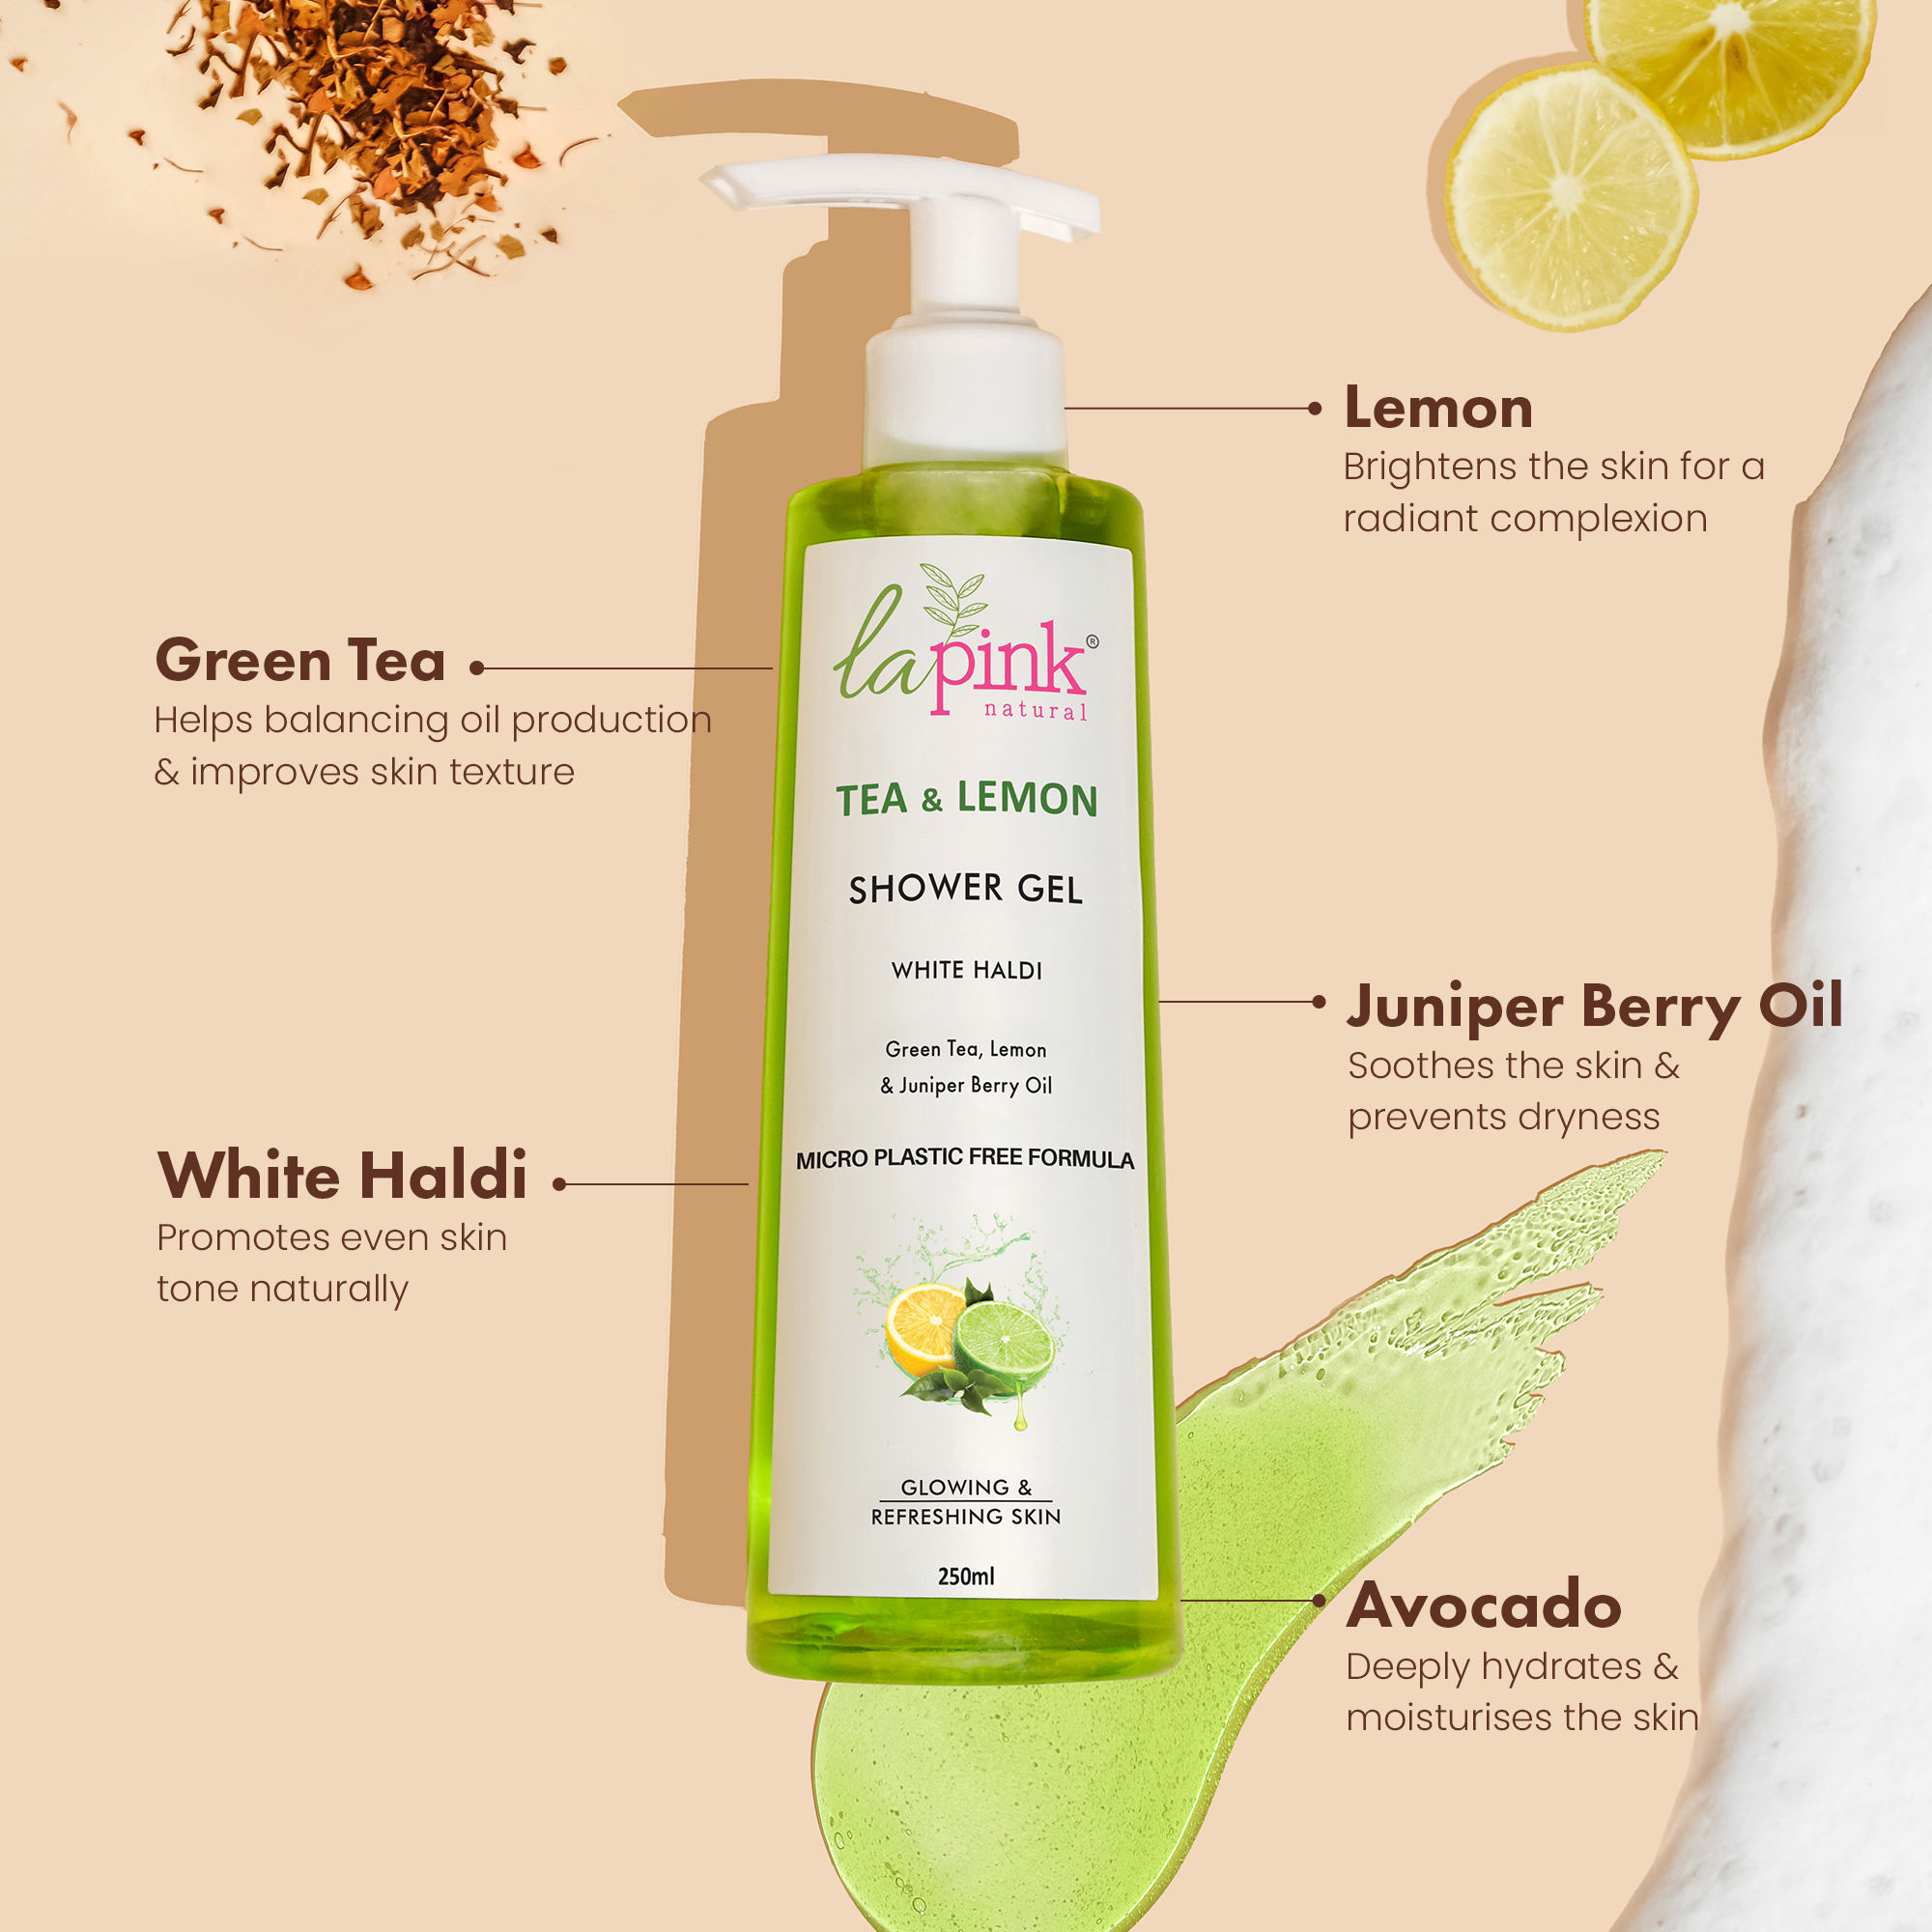 Tea &amp; Lemon Shower Gel with White Haldi for Glowing and Refreshing Skin